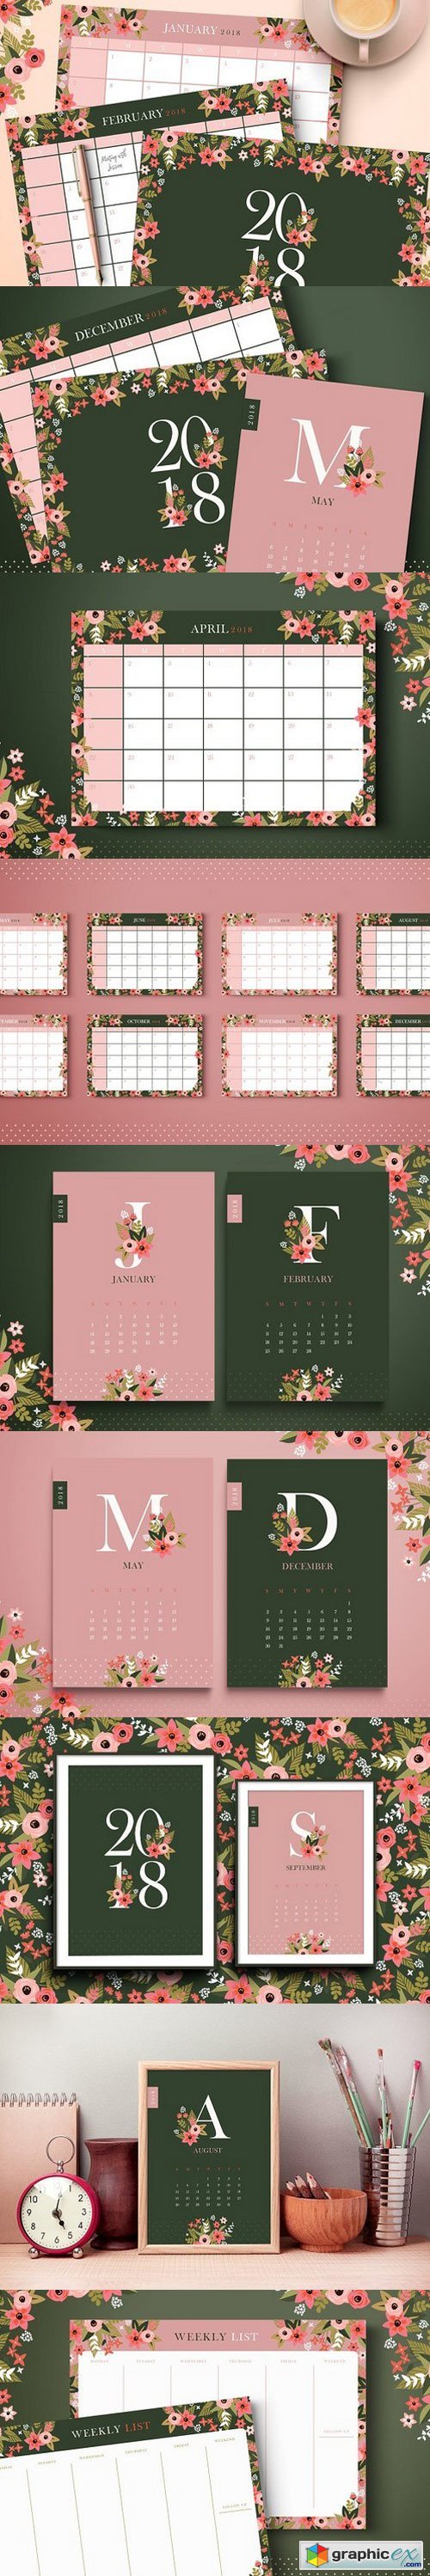 2018 Floral Calendar & Planners